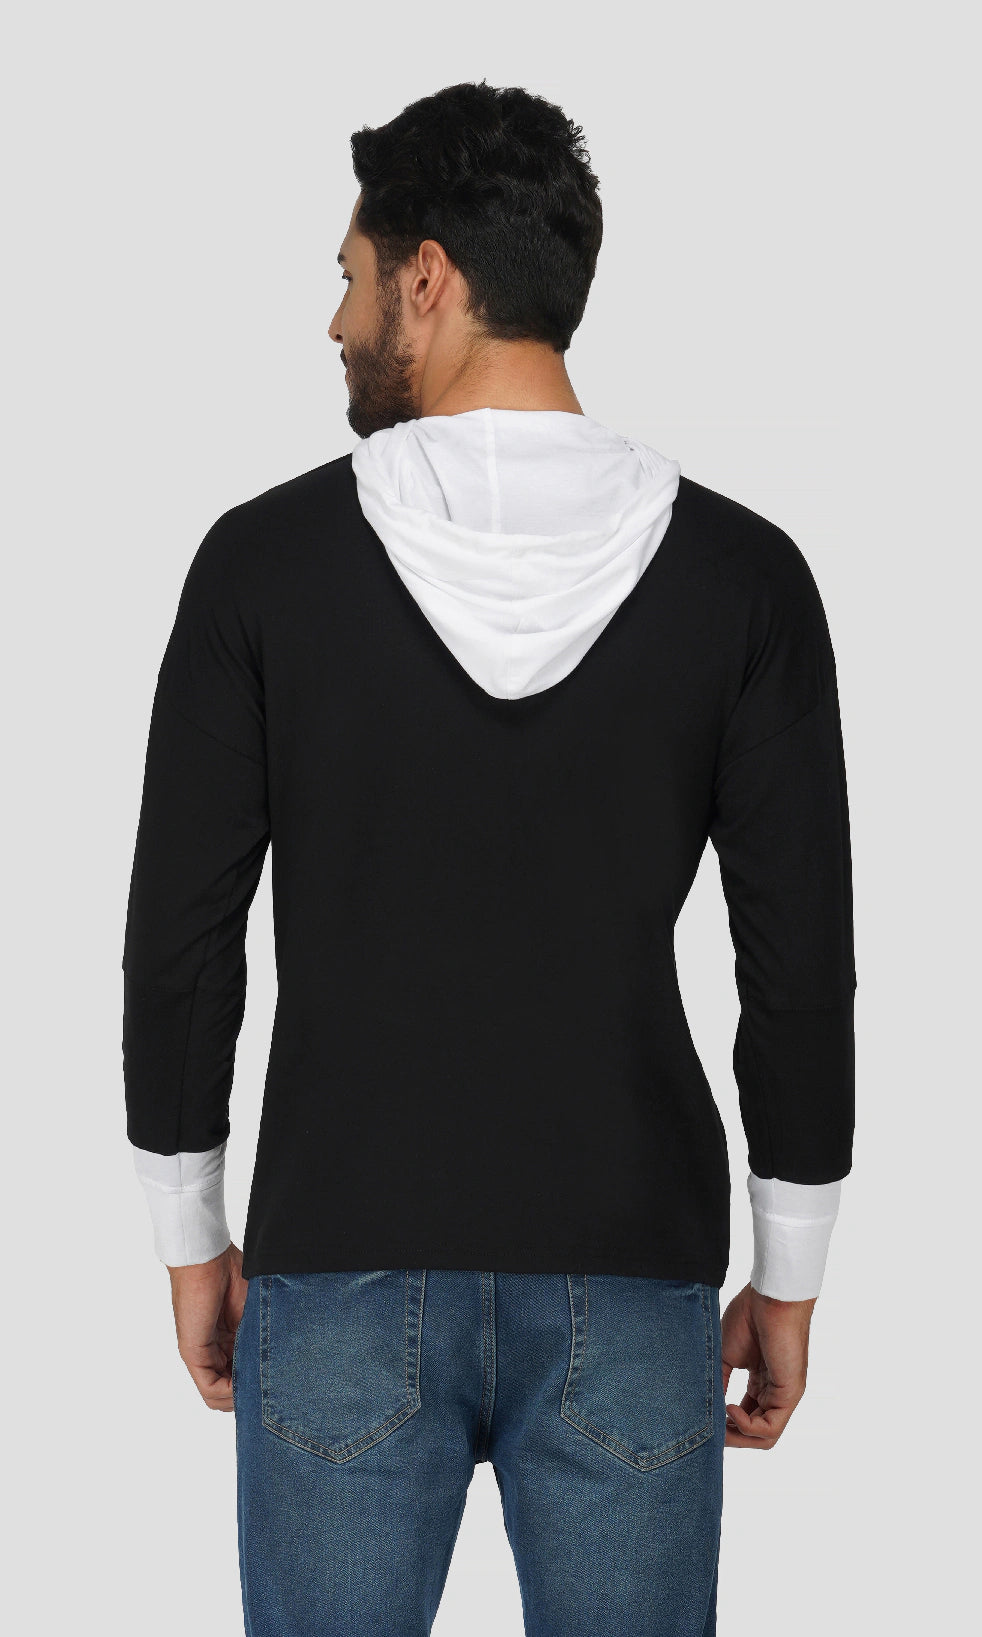 Mebadass Men's ColorBlocked OverSized Hooded T-shirts - Black & White